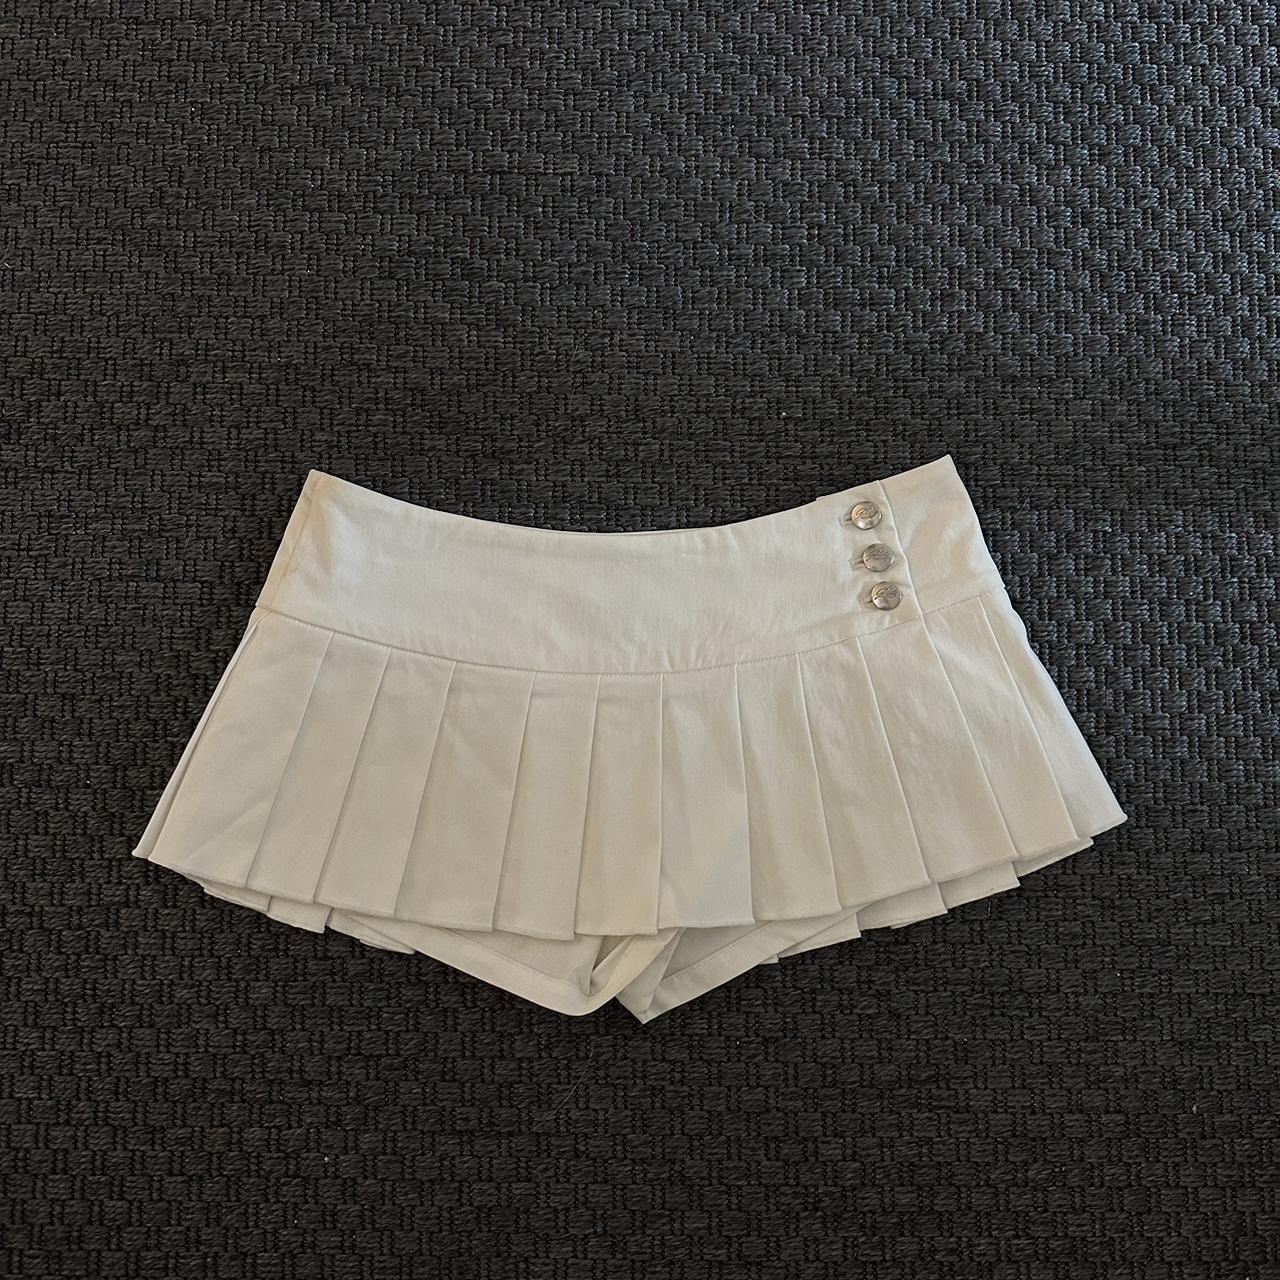 I.AM.GIA Remini skort white XS micro mini skirt with... - Depop